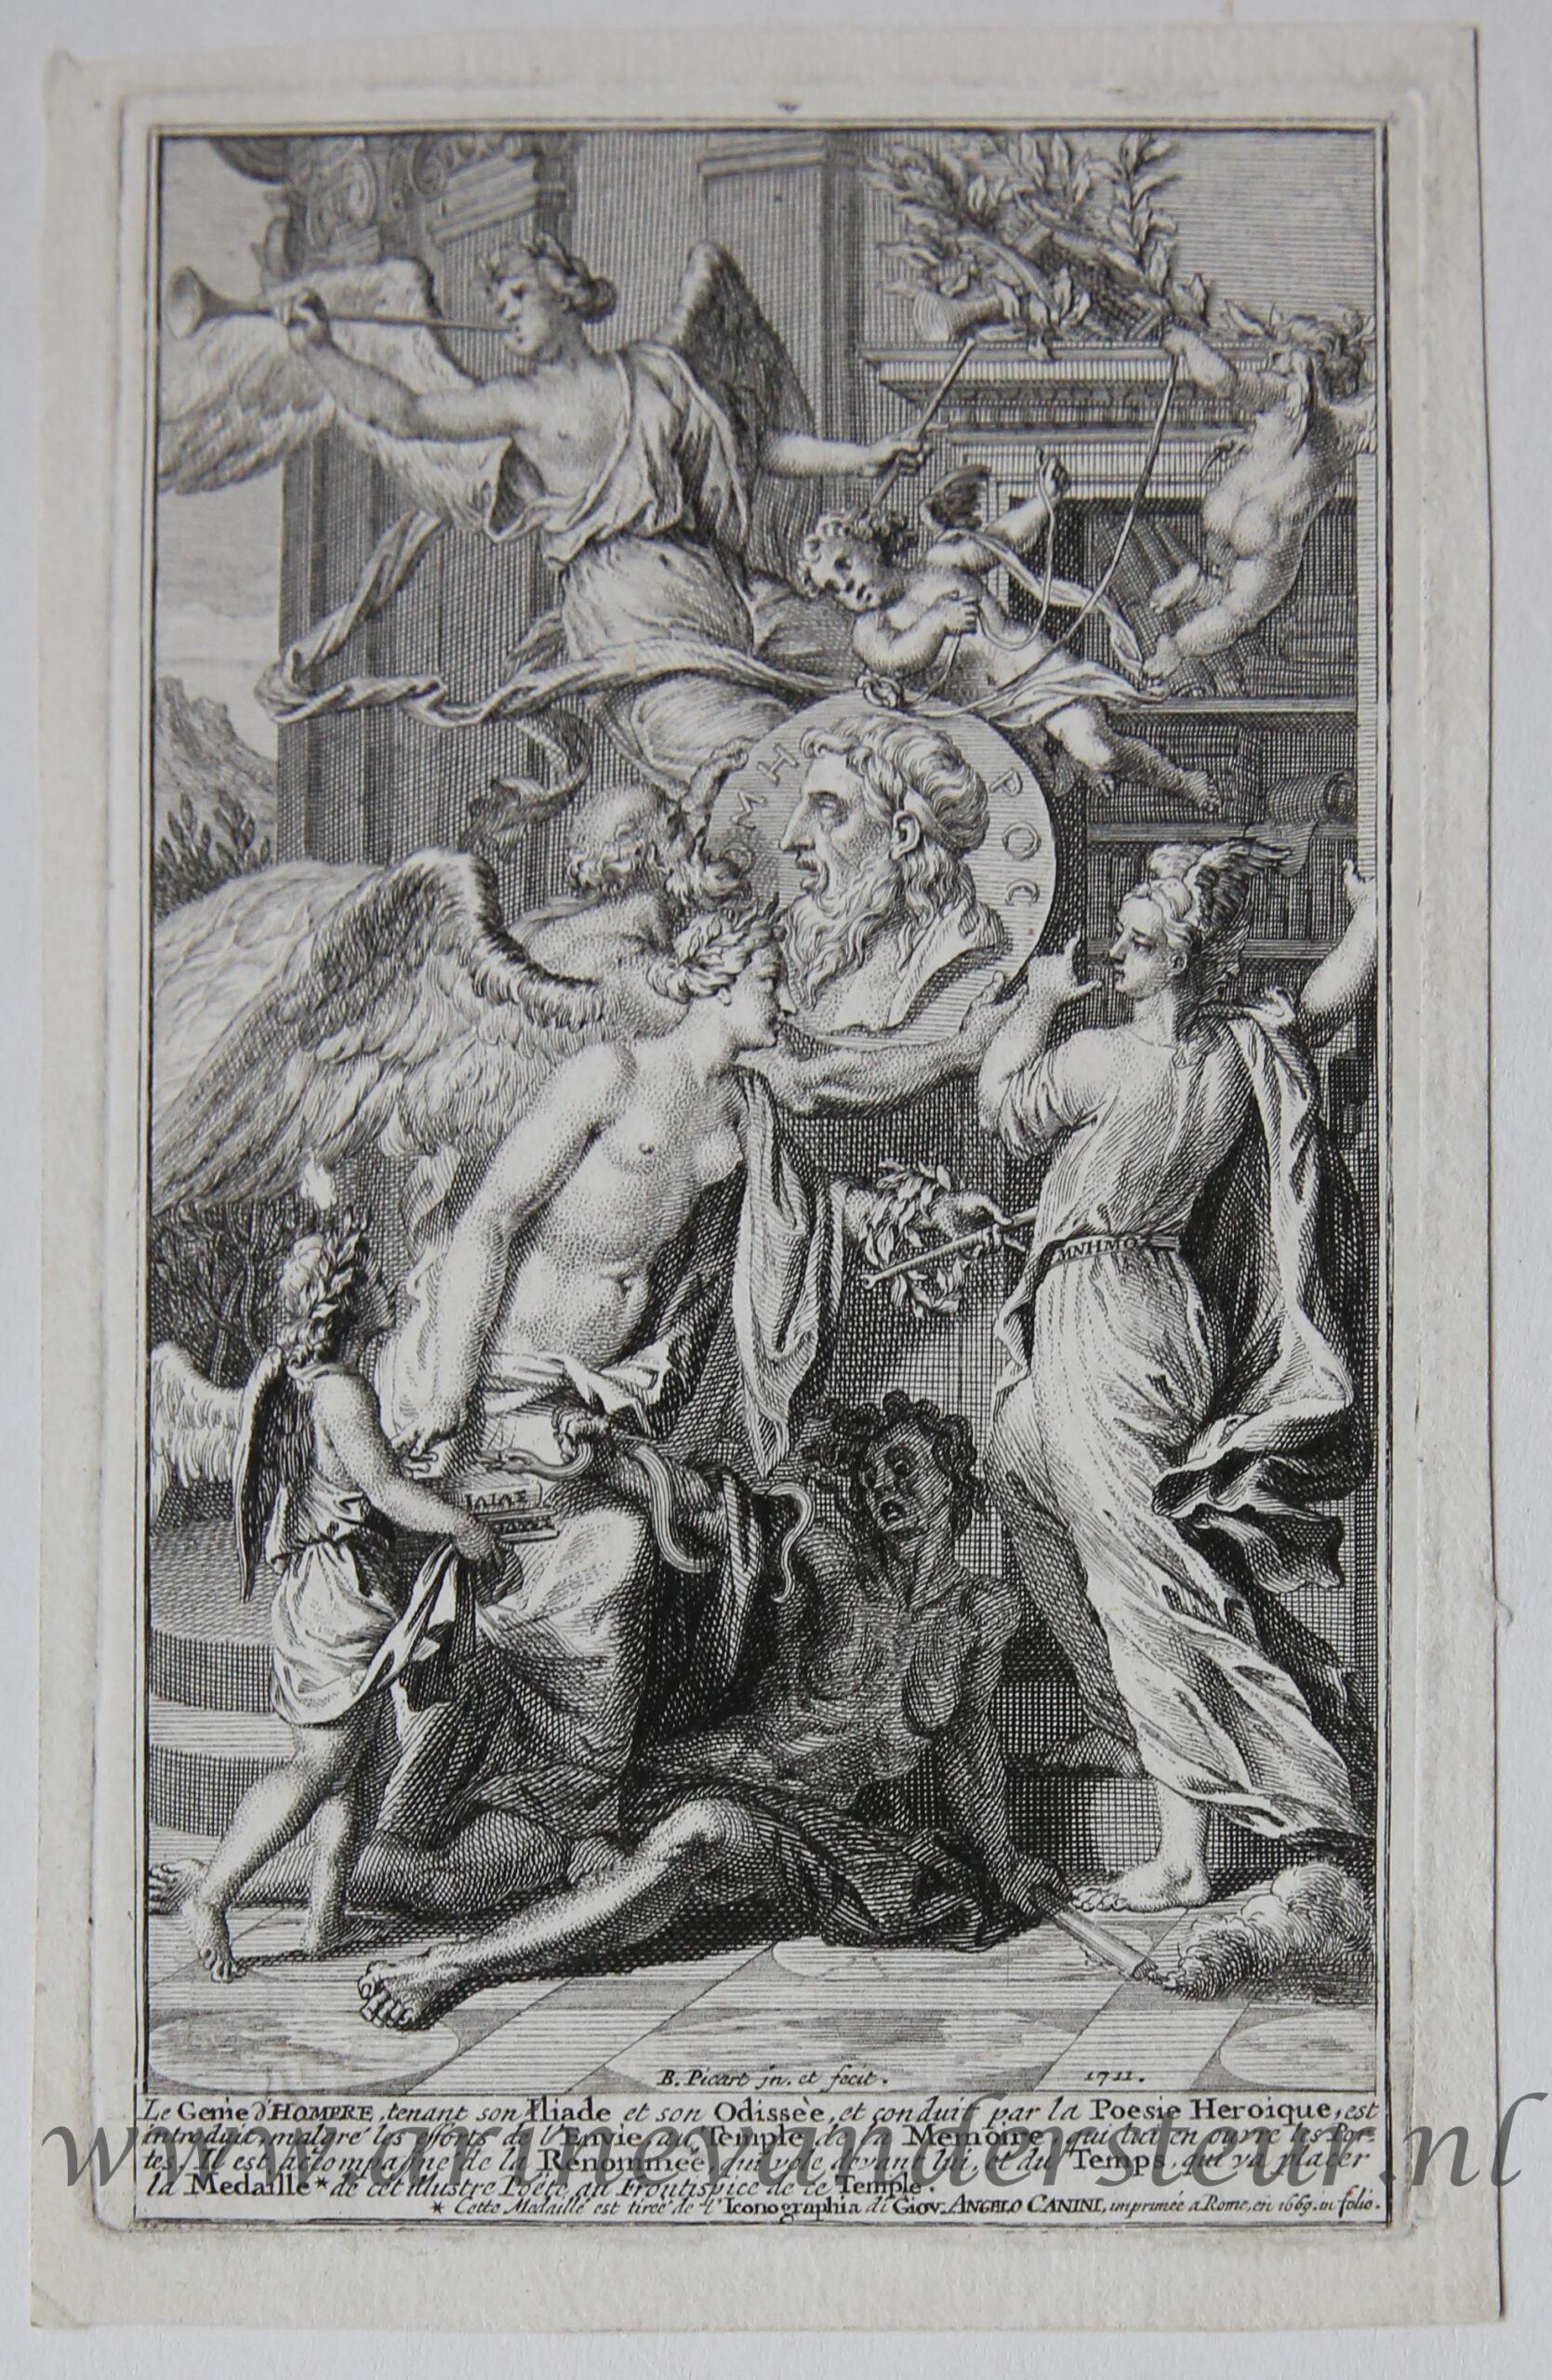 [Antique title page, 1711] Allegorical composition, published 1711, 1 p.